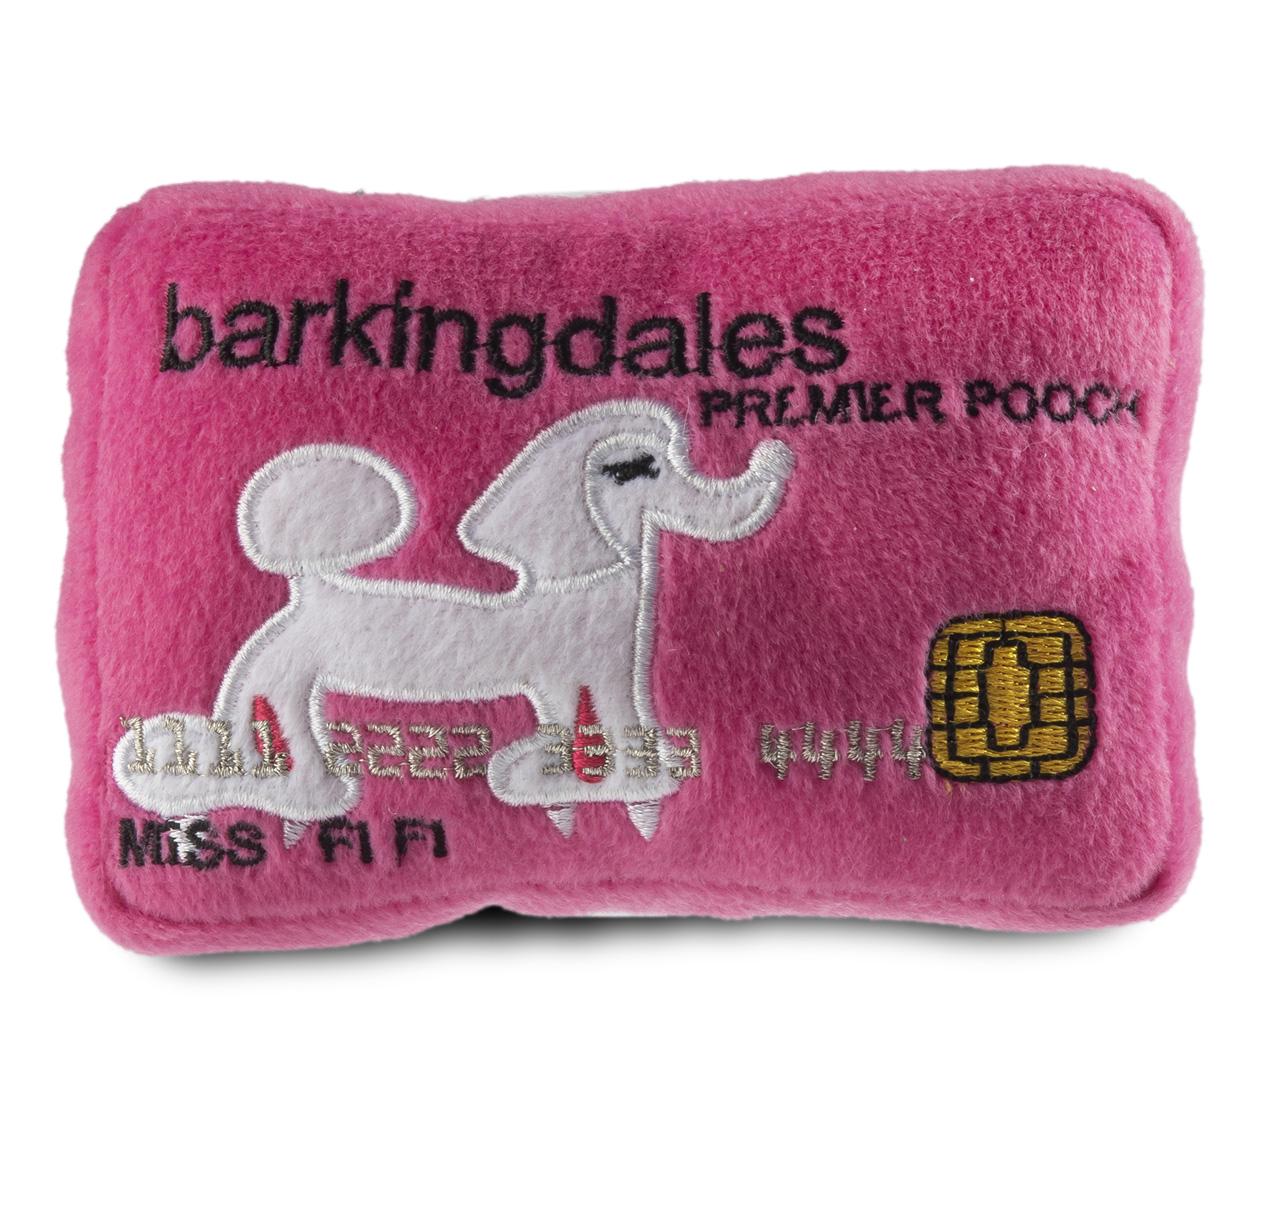 Barkingdales Credit Card Plush Toy - Scarvesnthangs